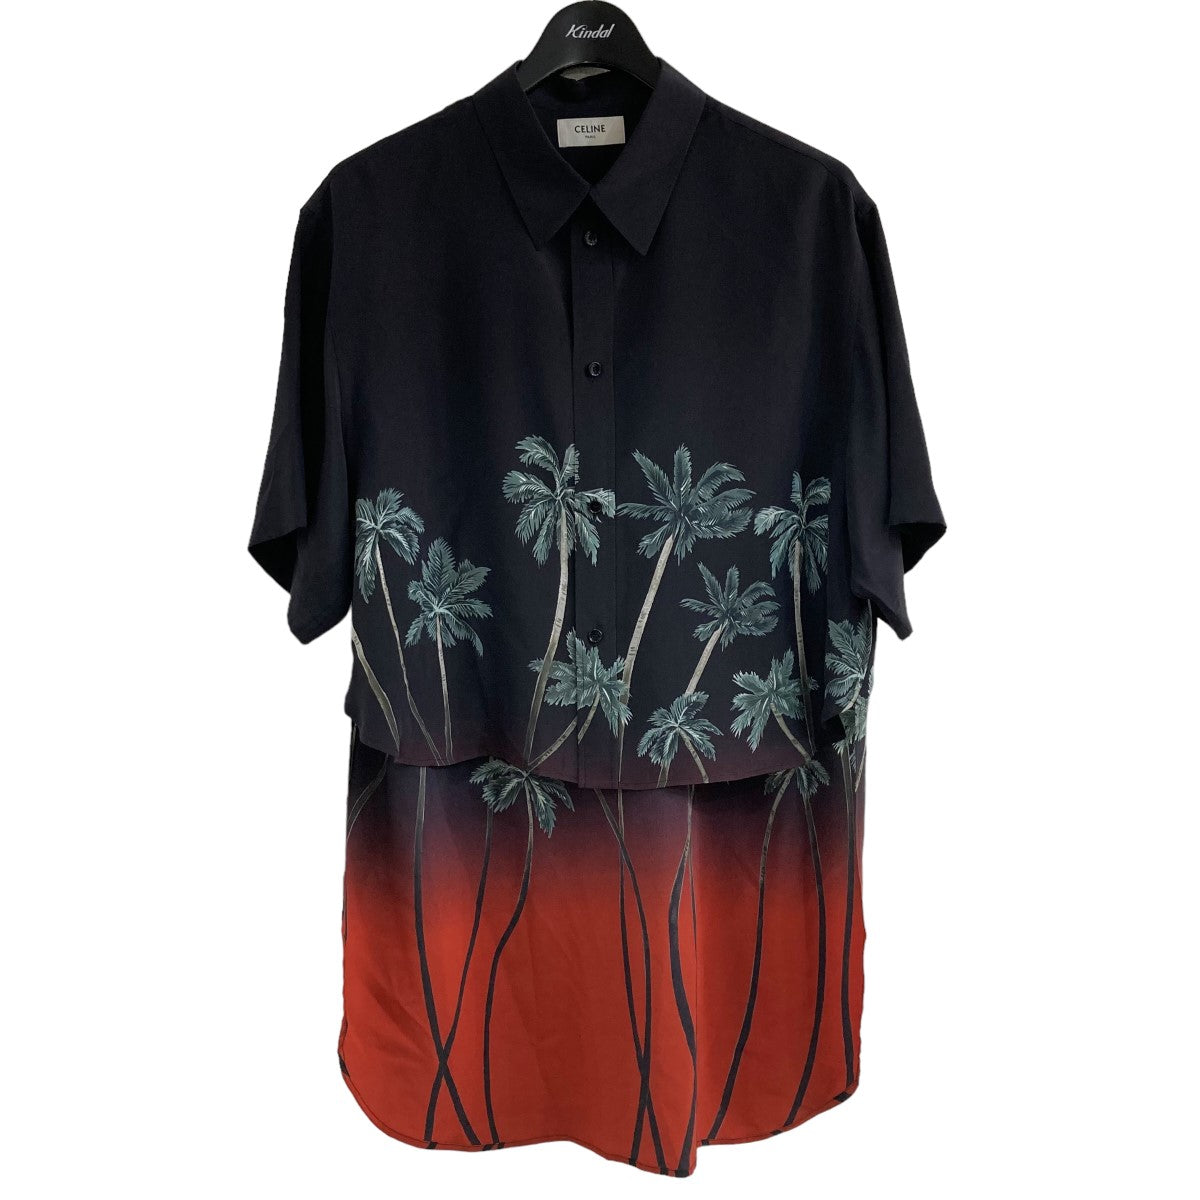 CELINE(セリーヌ) ｢ailcoat Shirt In Crepe De Chine｣テイルコート半袖 